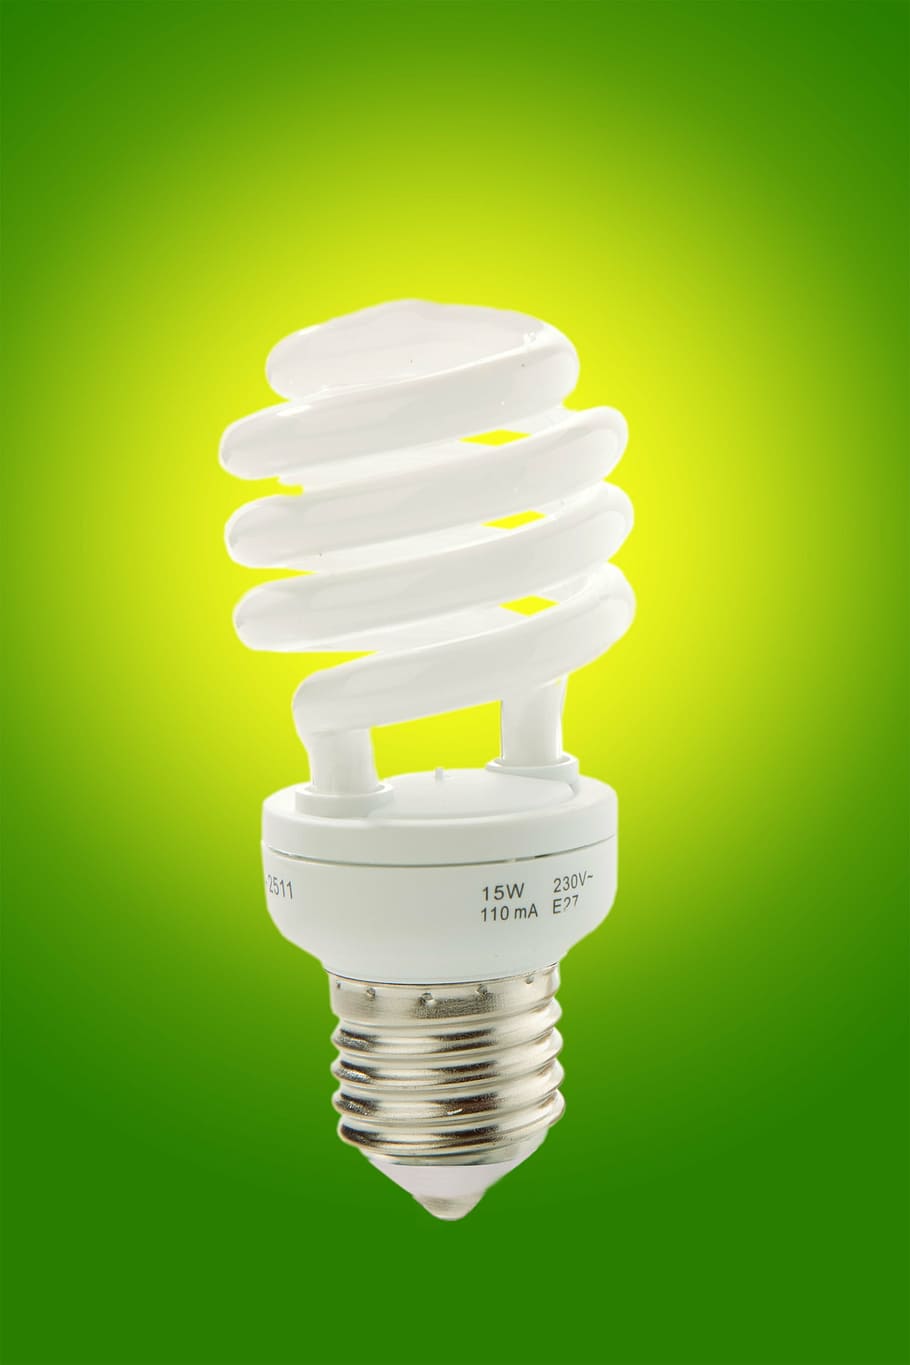 bulbo espiral branco, sparlampe, economizando luz, bulbo economizador, luz, economizar eletricidade, corrente, economizar, energia, energiesparlampe